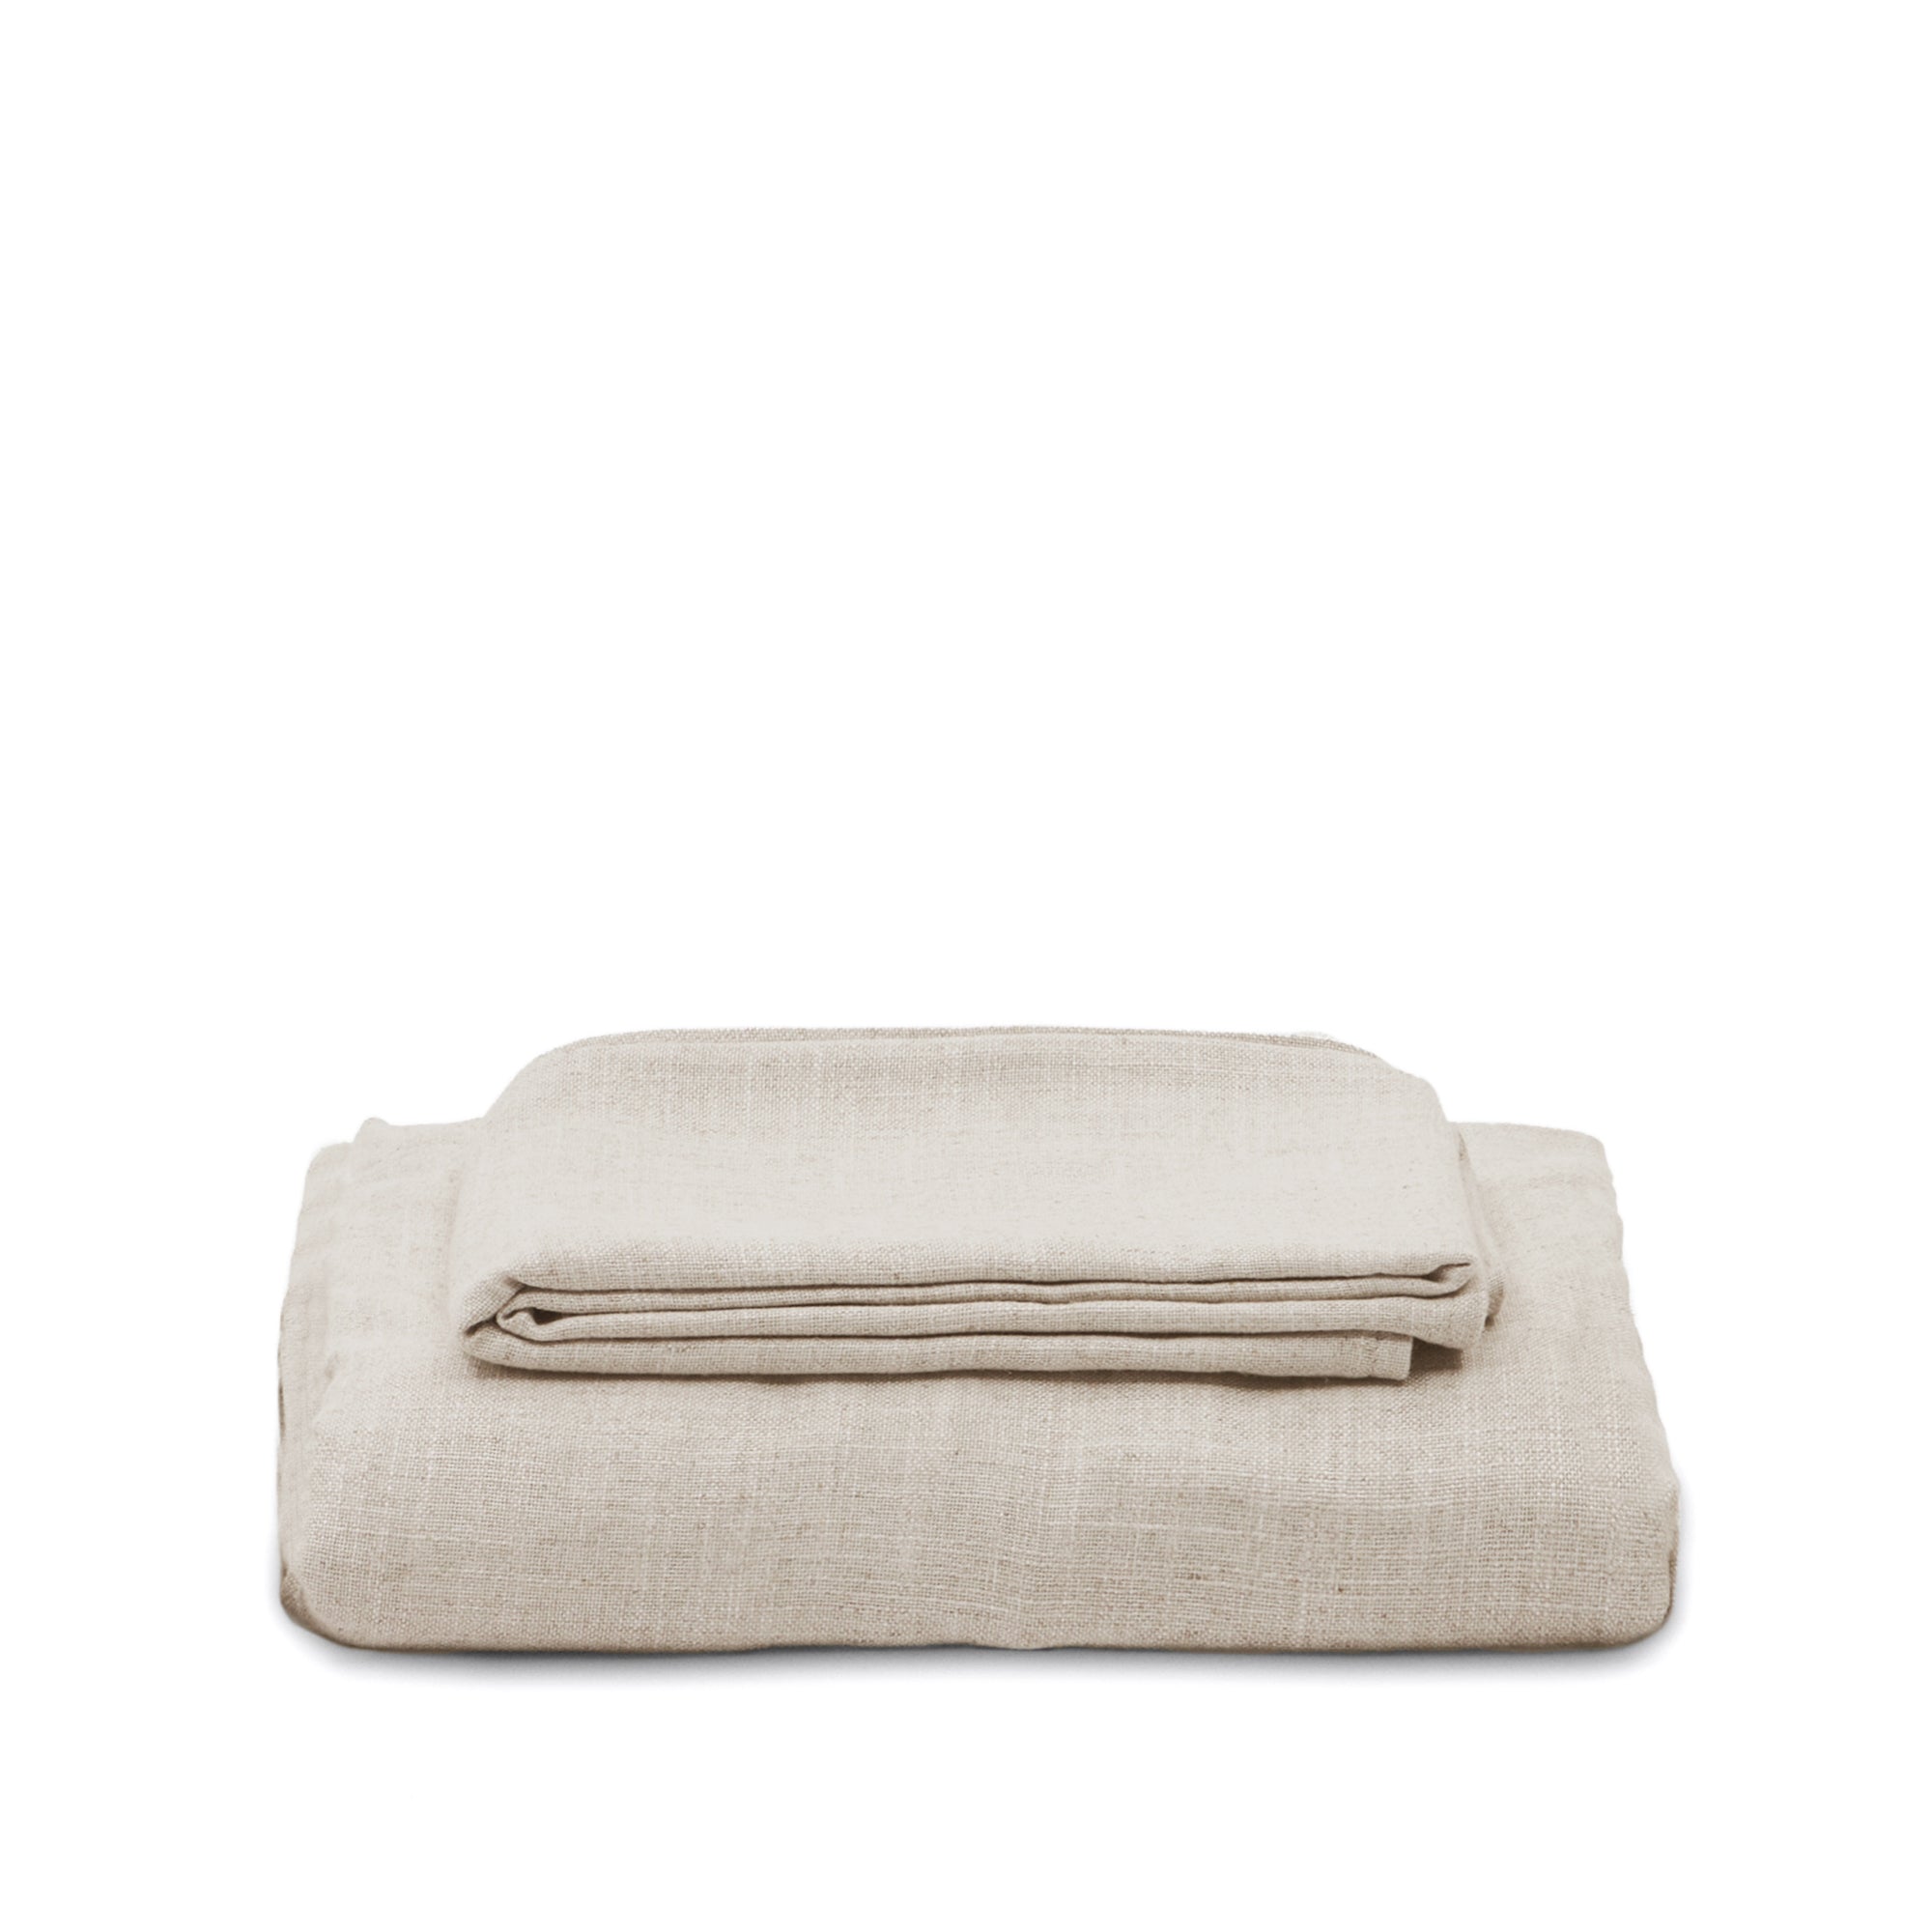 Anarela 3 seater sofa cover in beige linen